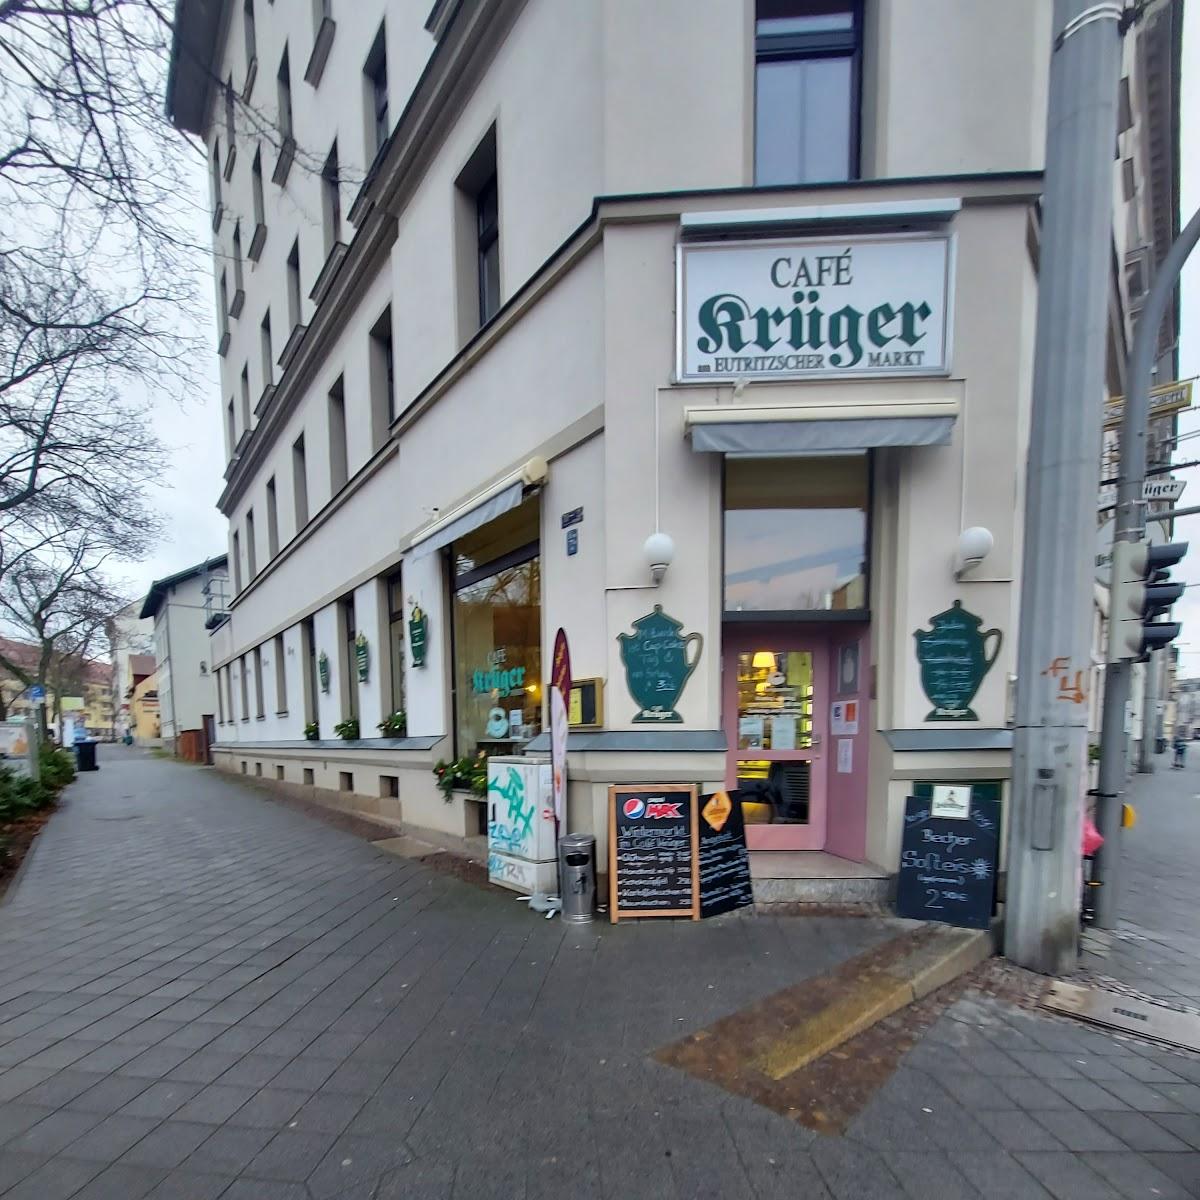 Restaurant "Café Krüger" in Leipzig